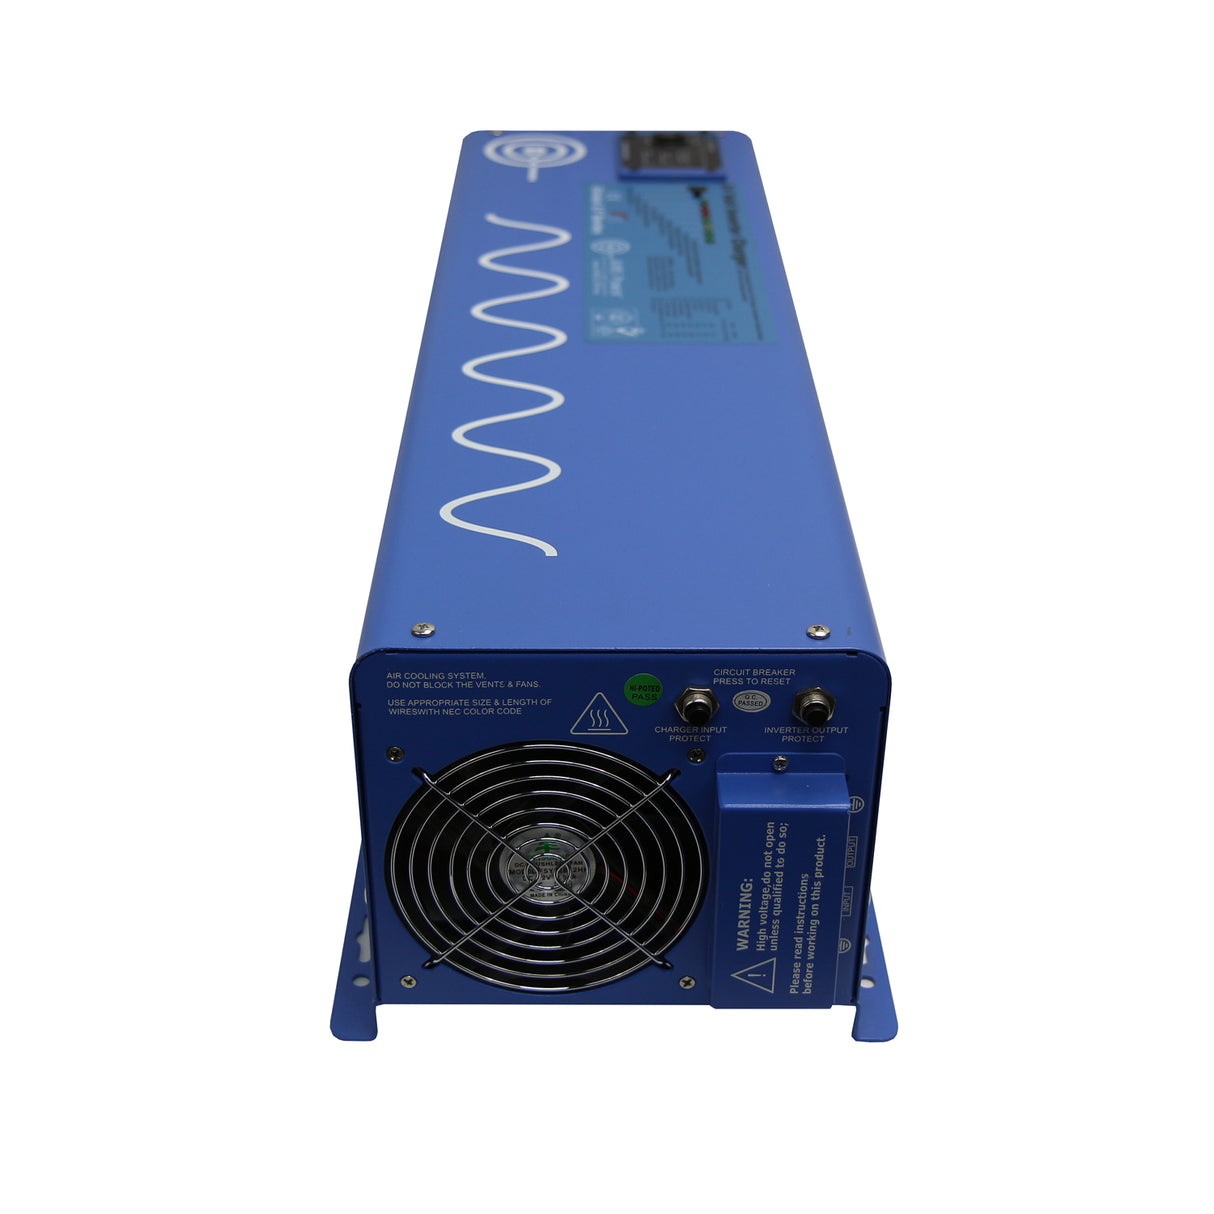 AIMS Power 6000 Watt Pure Sine Inverter Charger 48Vdc / 240Vac Input & 120/240Vac Split Phase Output - PICOGLF60W48V240VS